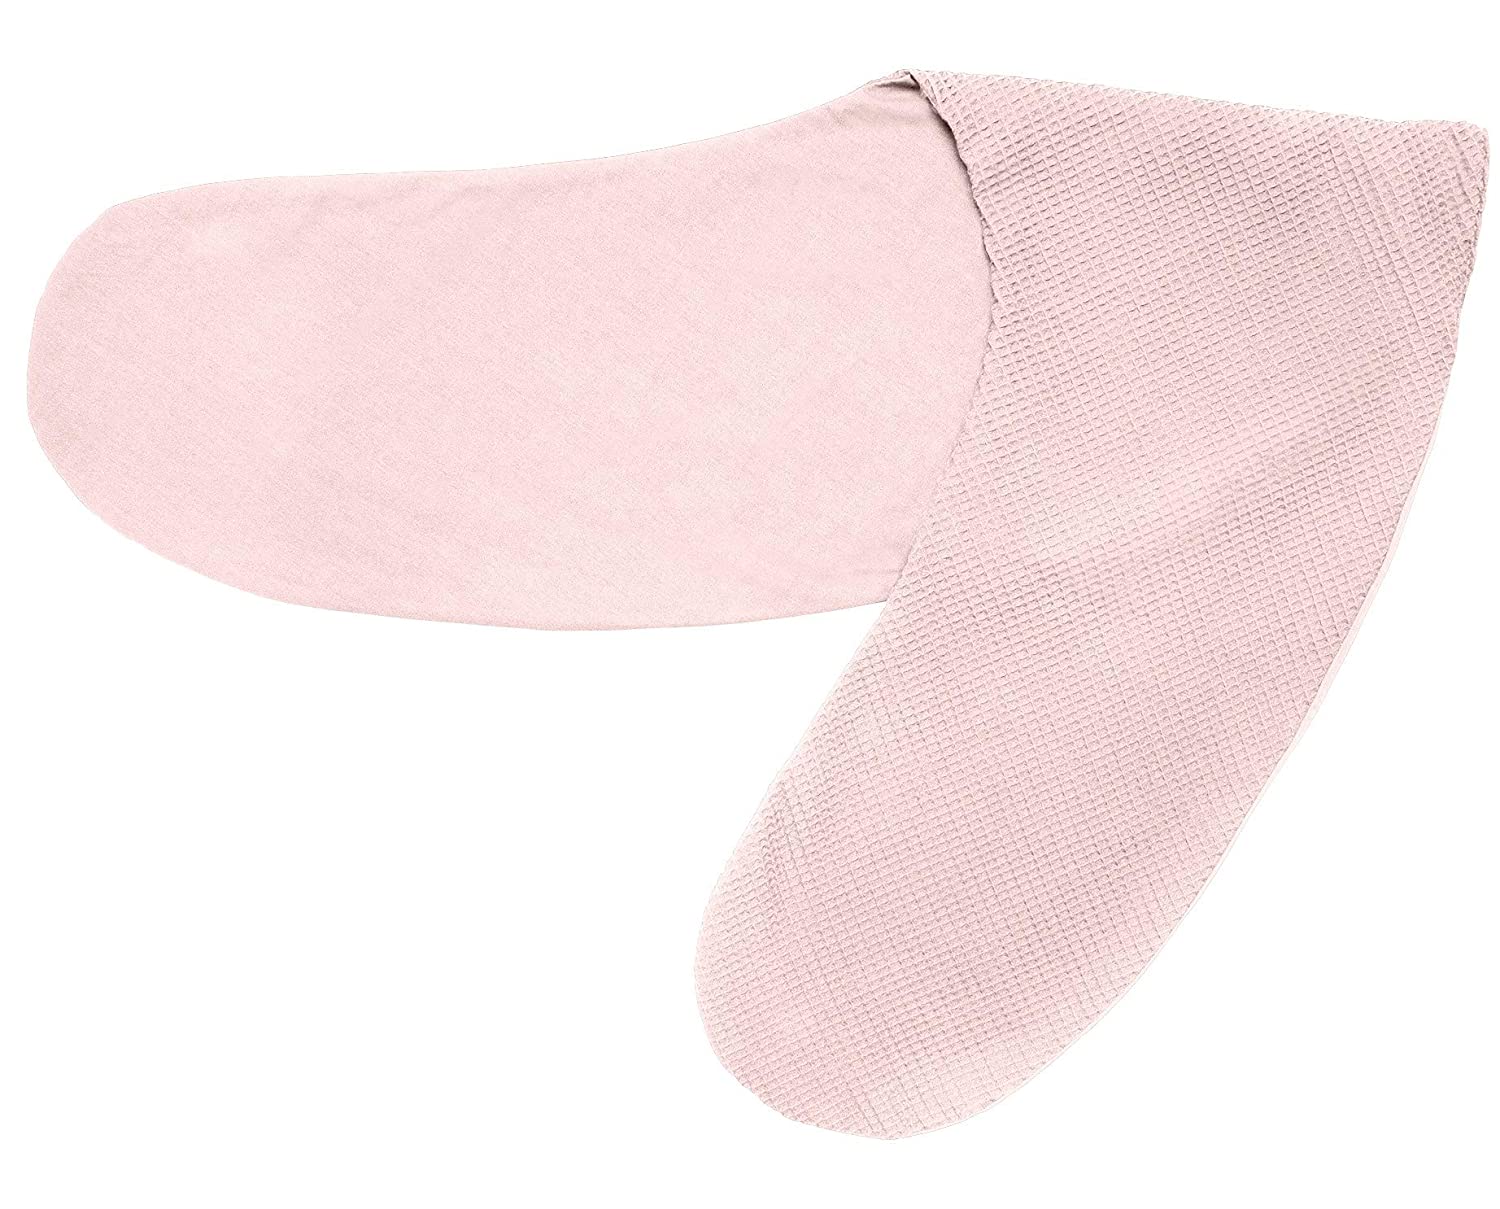 Ideenreich 2466 Ideenreich Nursing Pillow Cover 190 cm Rose Pink